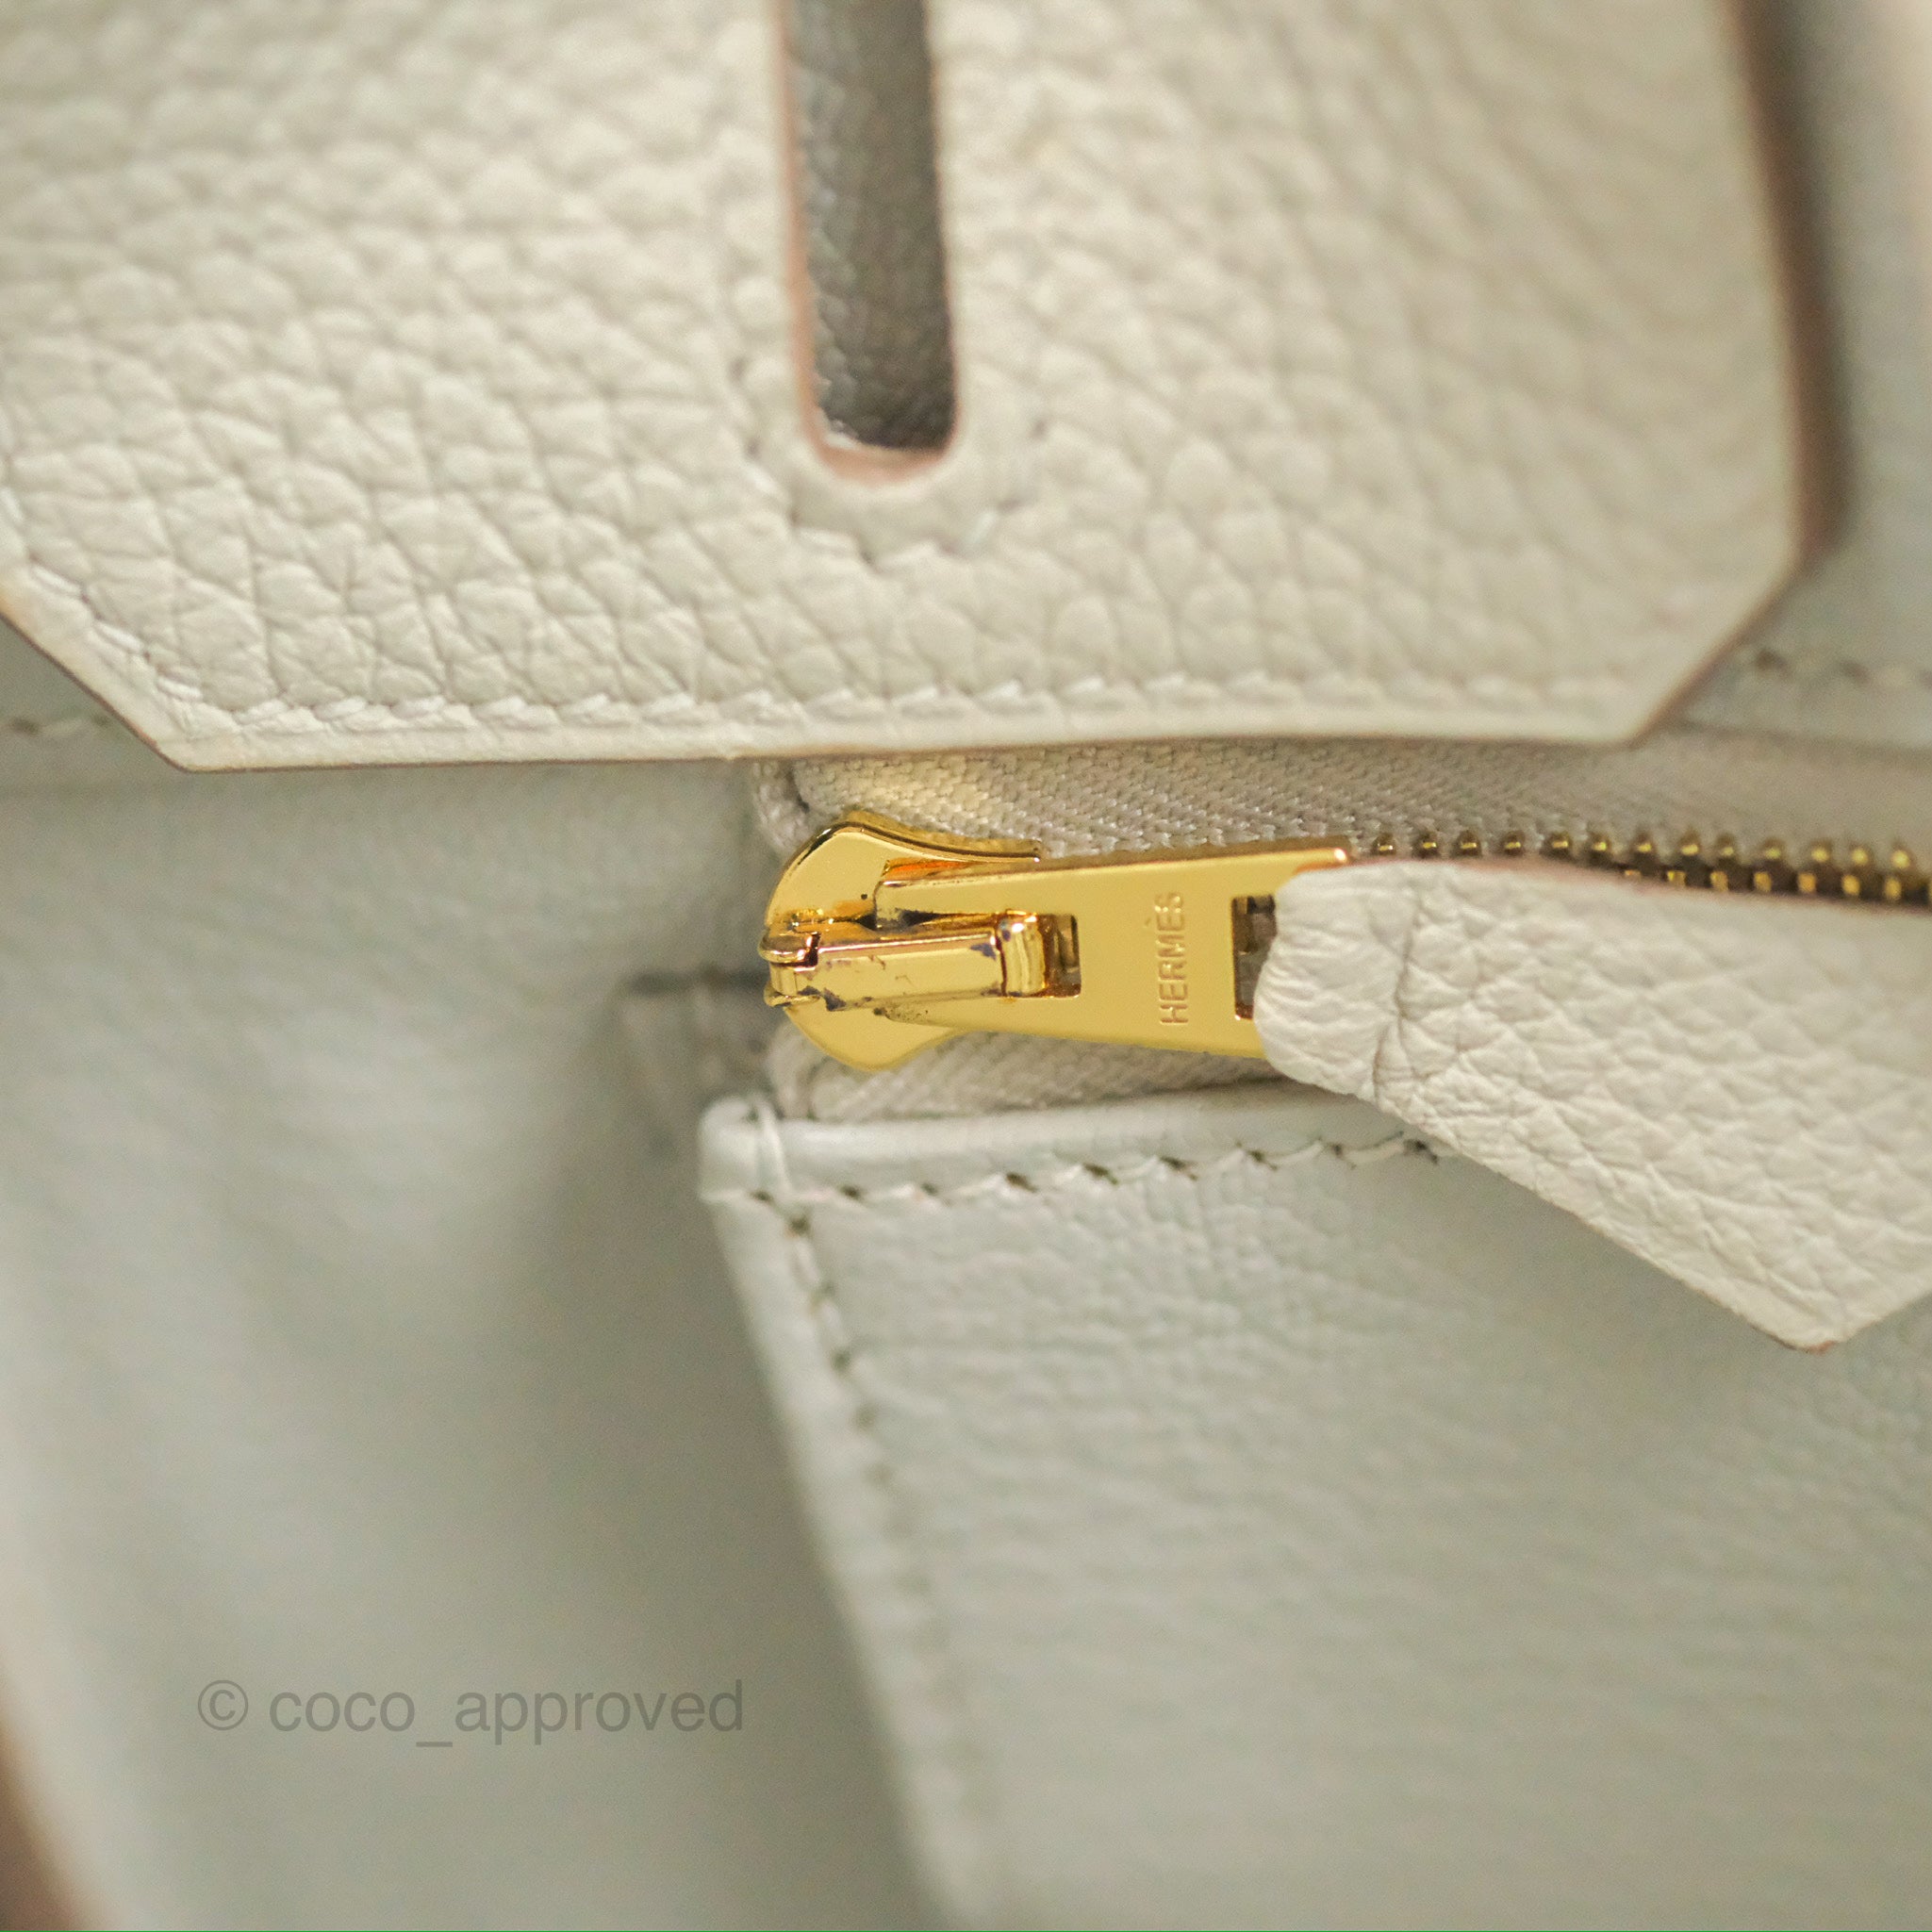 Hermes Birkin 25 Bag Gris Perle Togo Gold Hardware – Mightychic